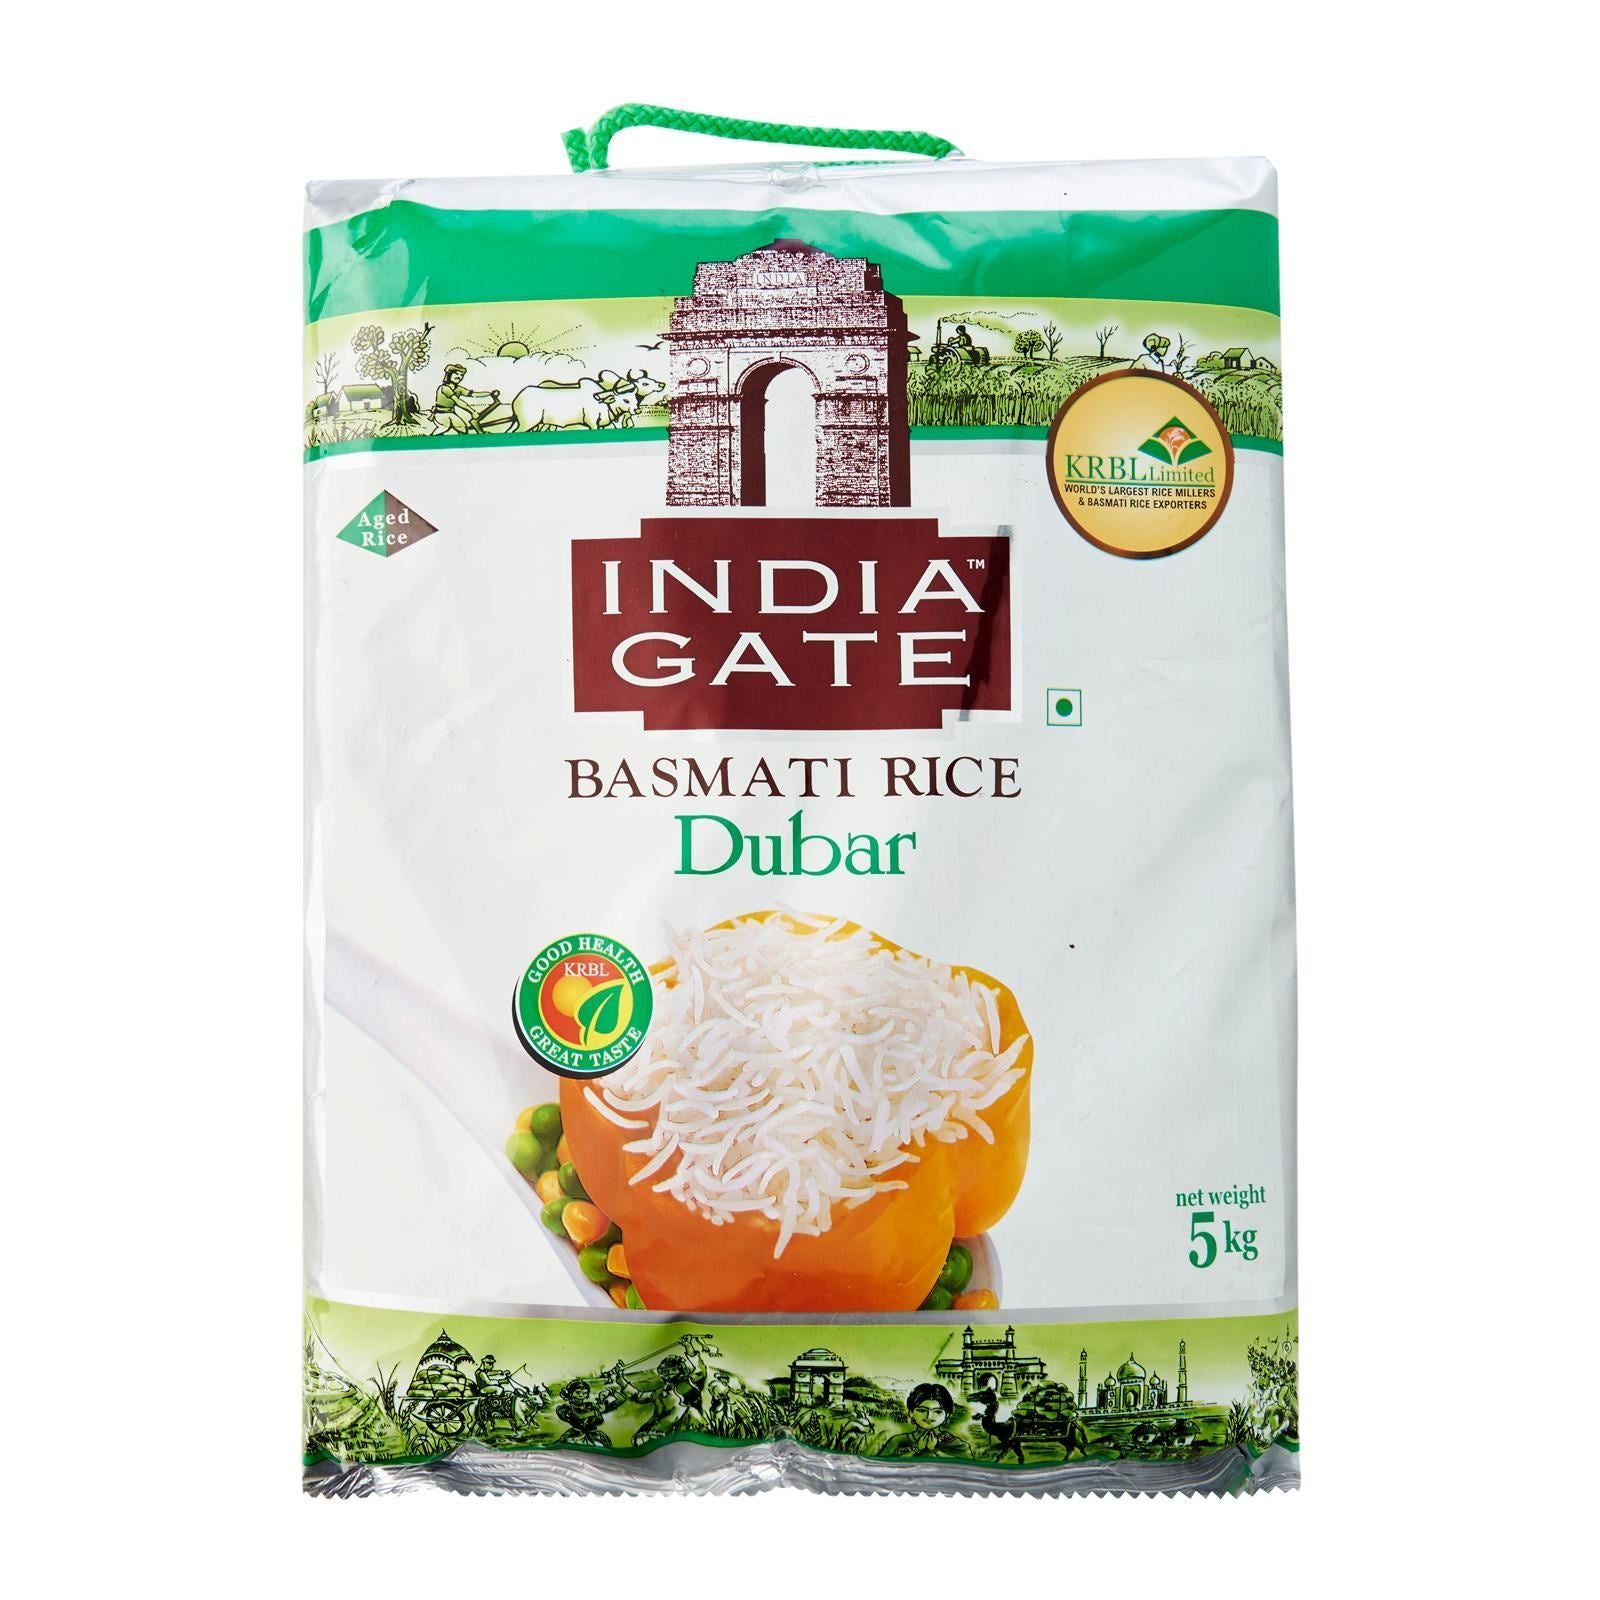 India Gate Dubar Basmati Rice 